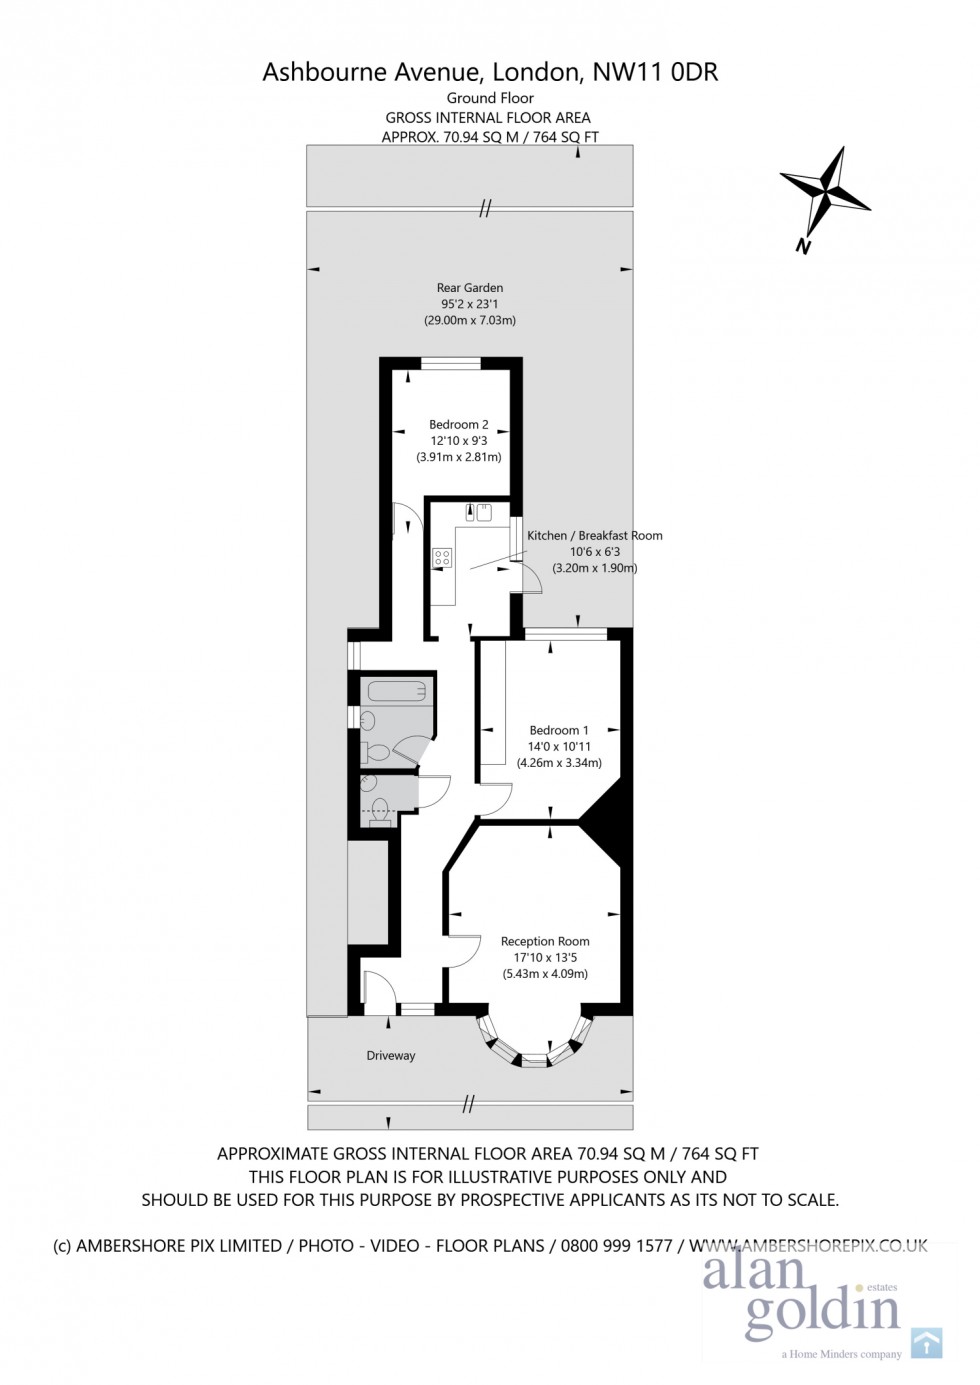 Floorplan for Ashbourne Avenue, NW11